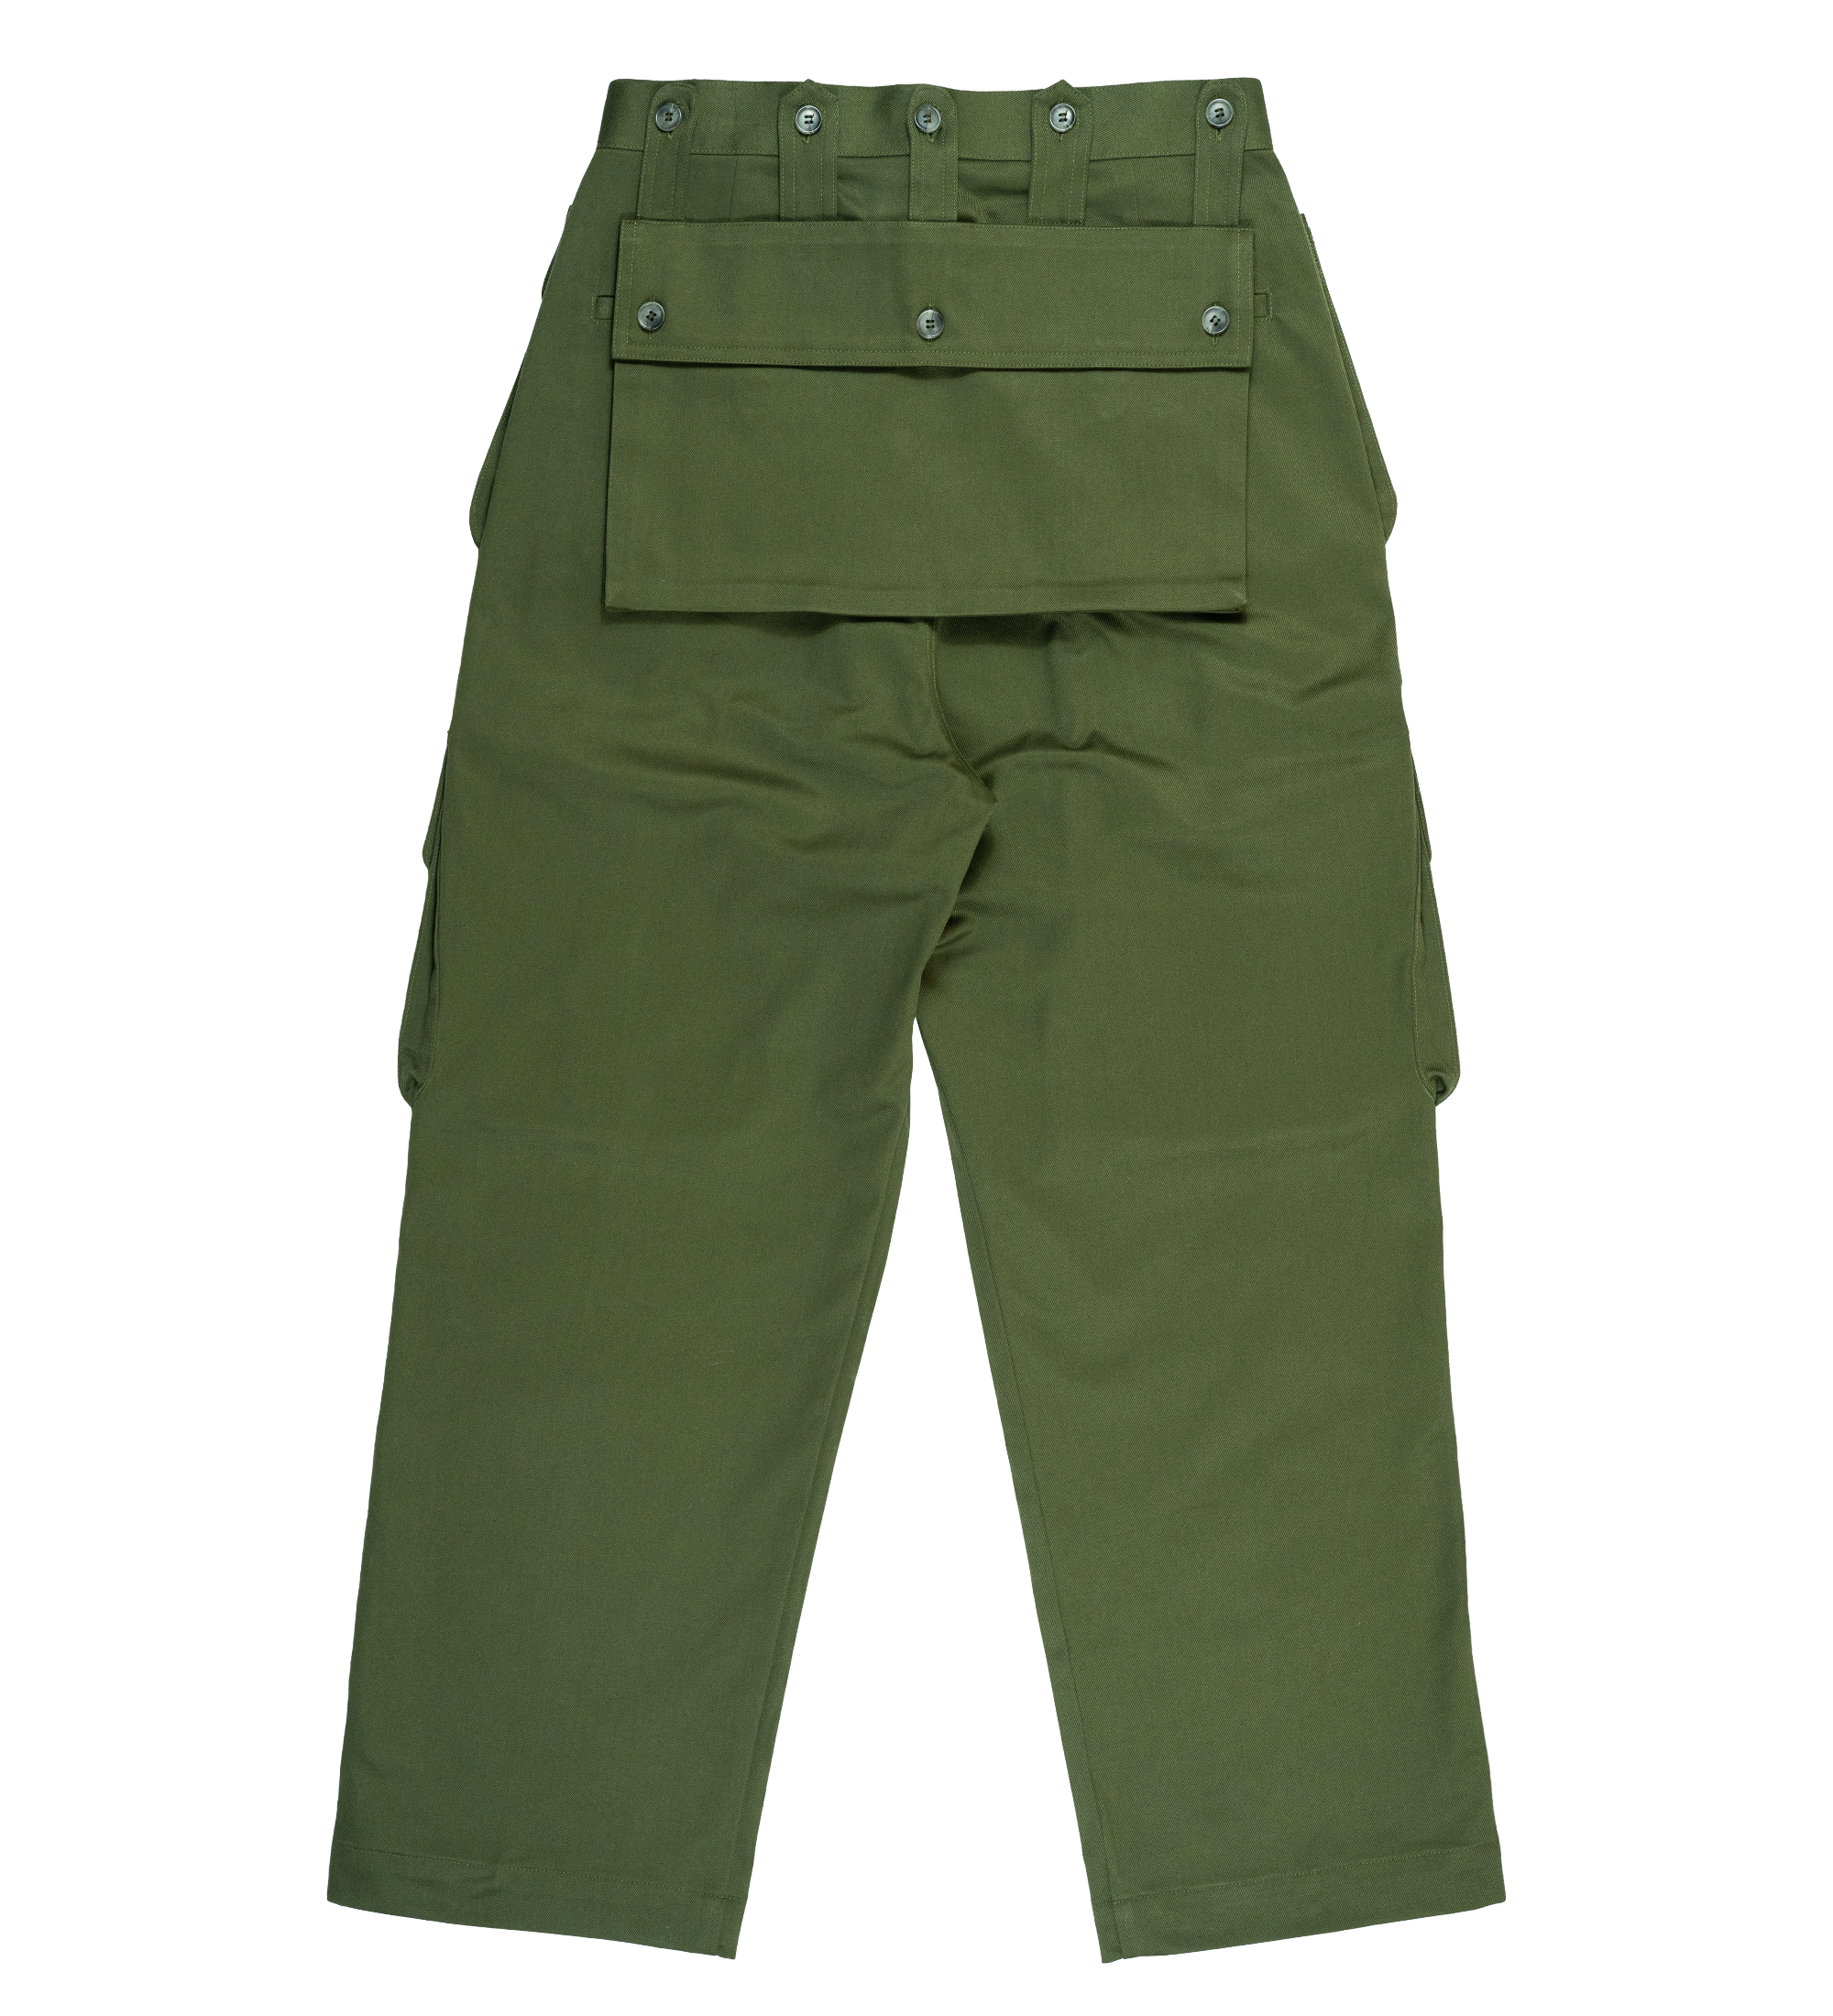 Military Jungle Pants